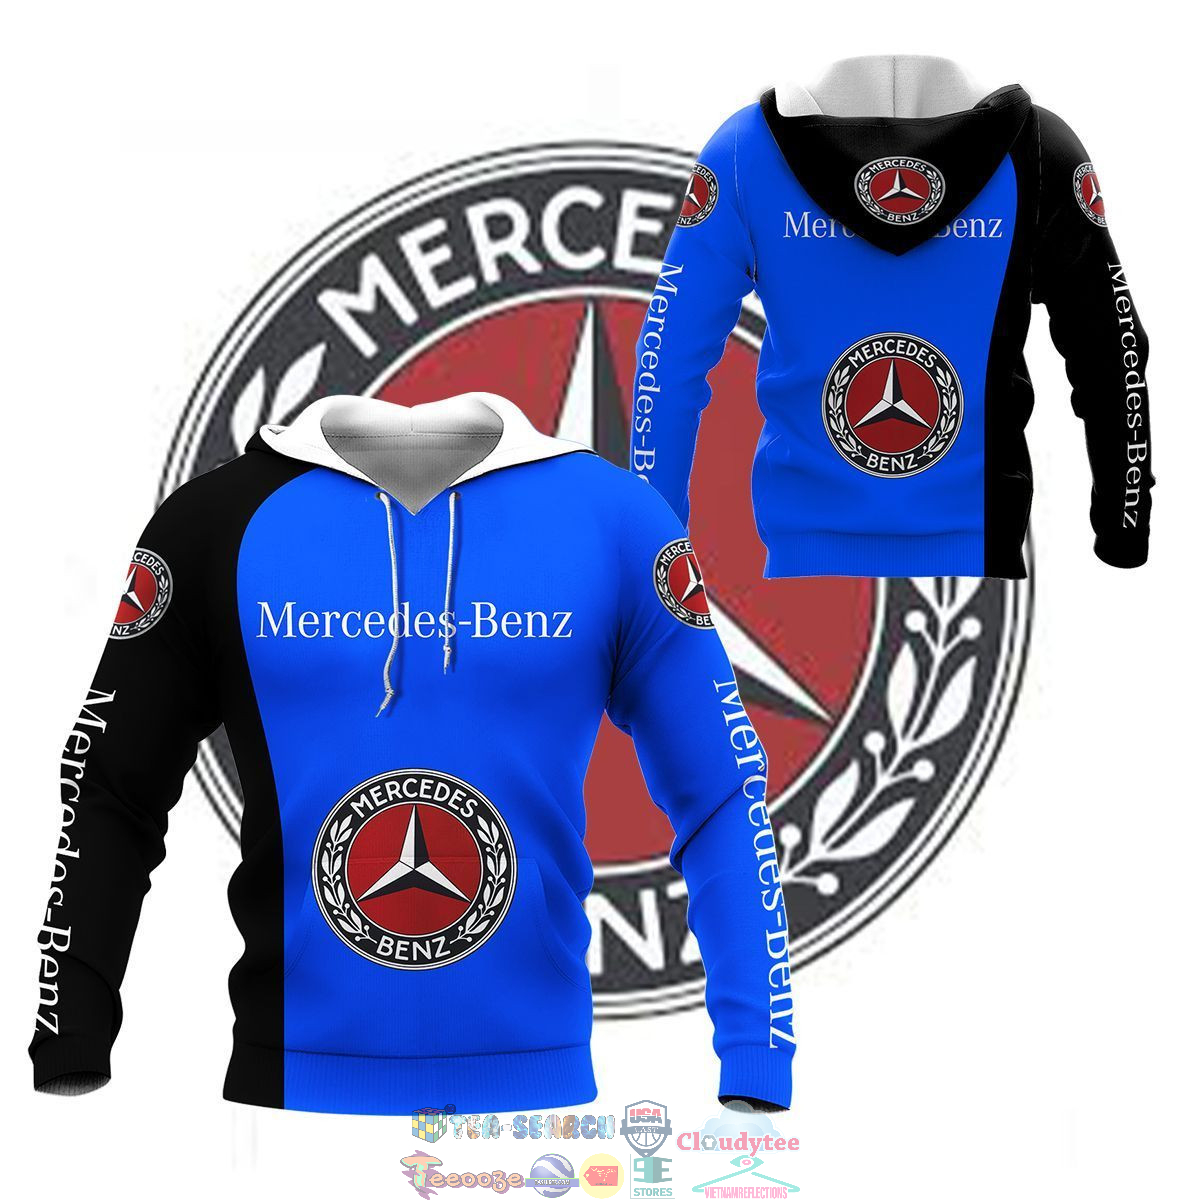 Mercedes-Benz ver 1 3D hoodie and t-shirt – Saleoff